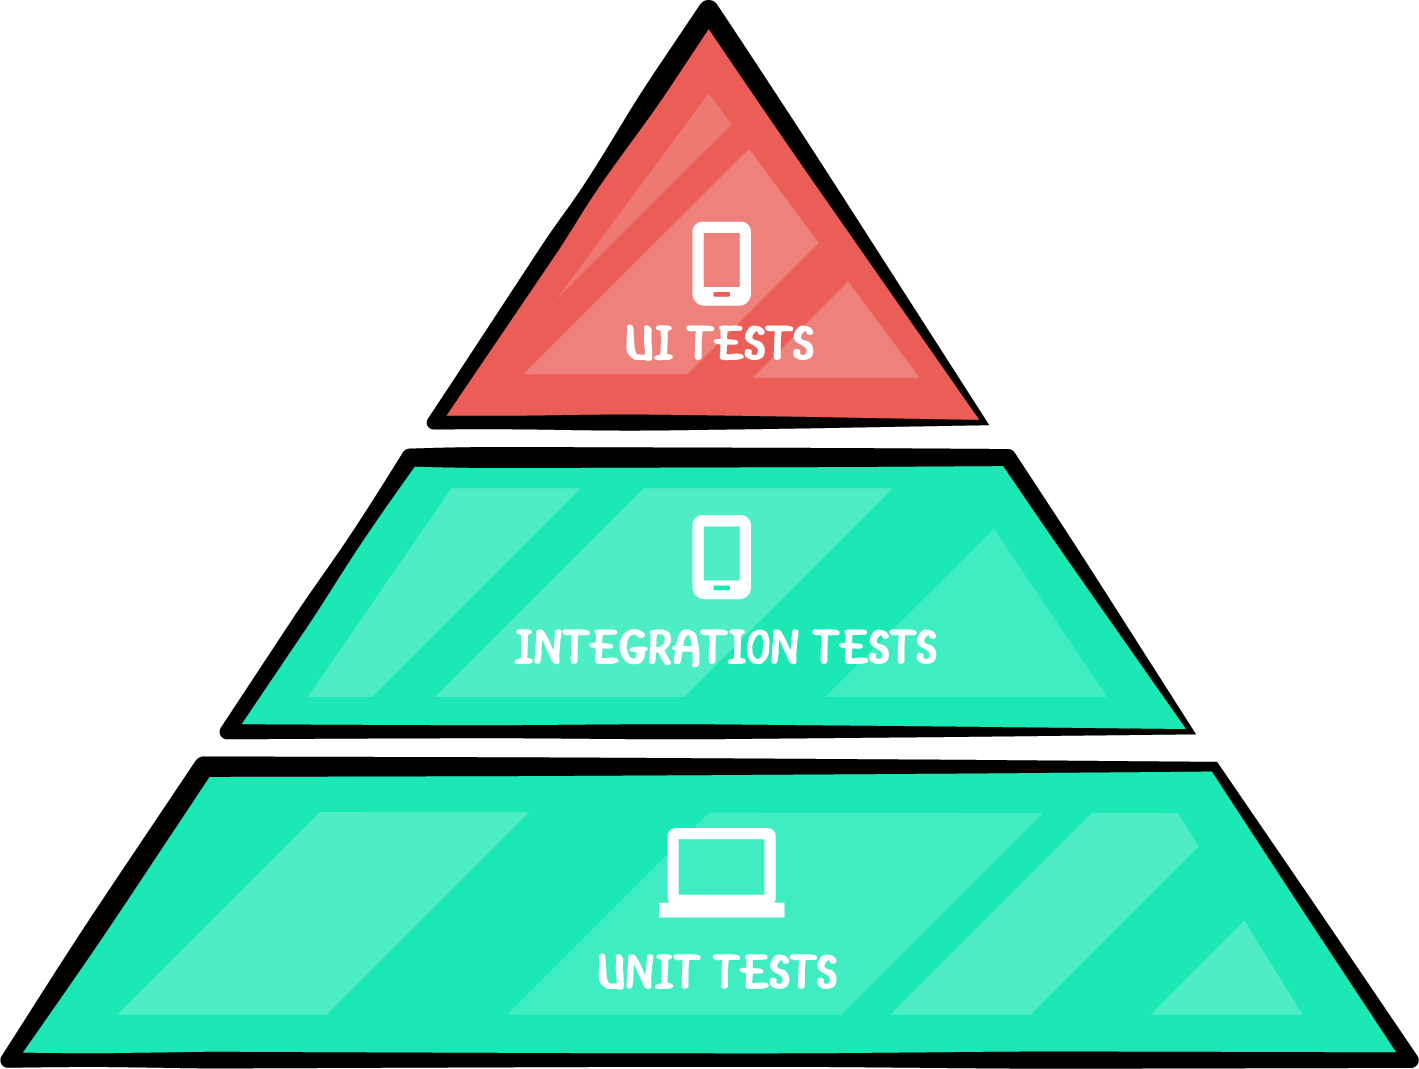 ui_tests_pyramid.png